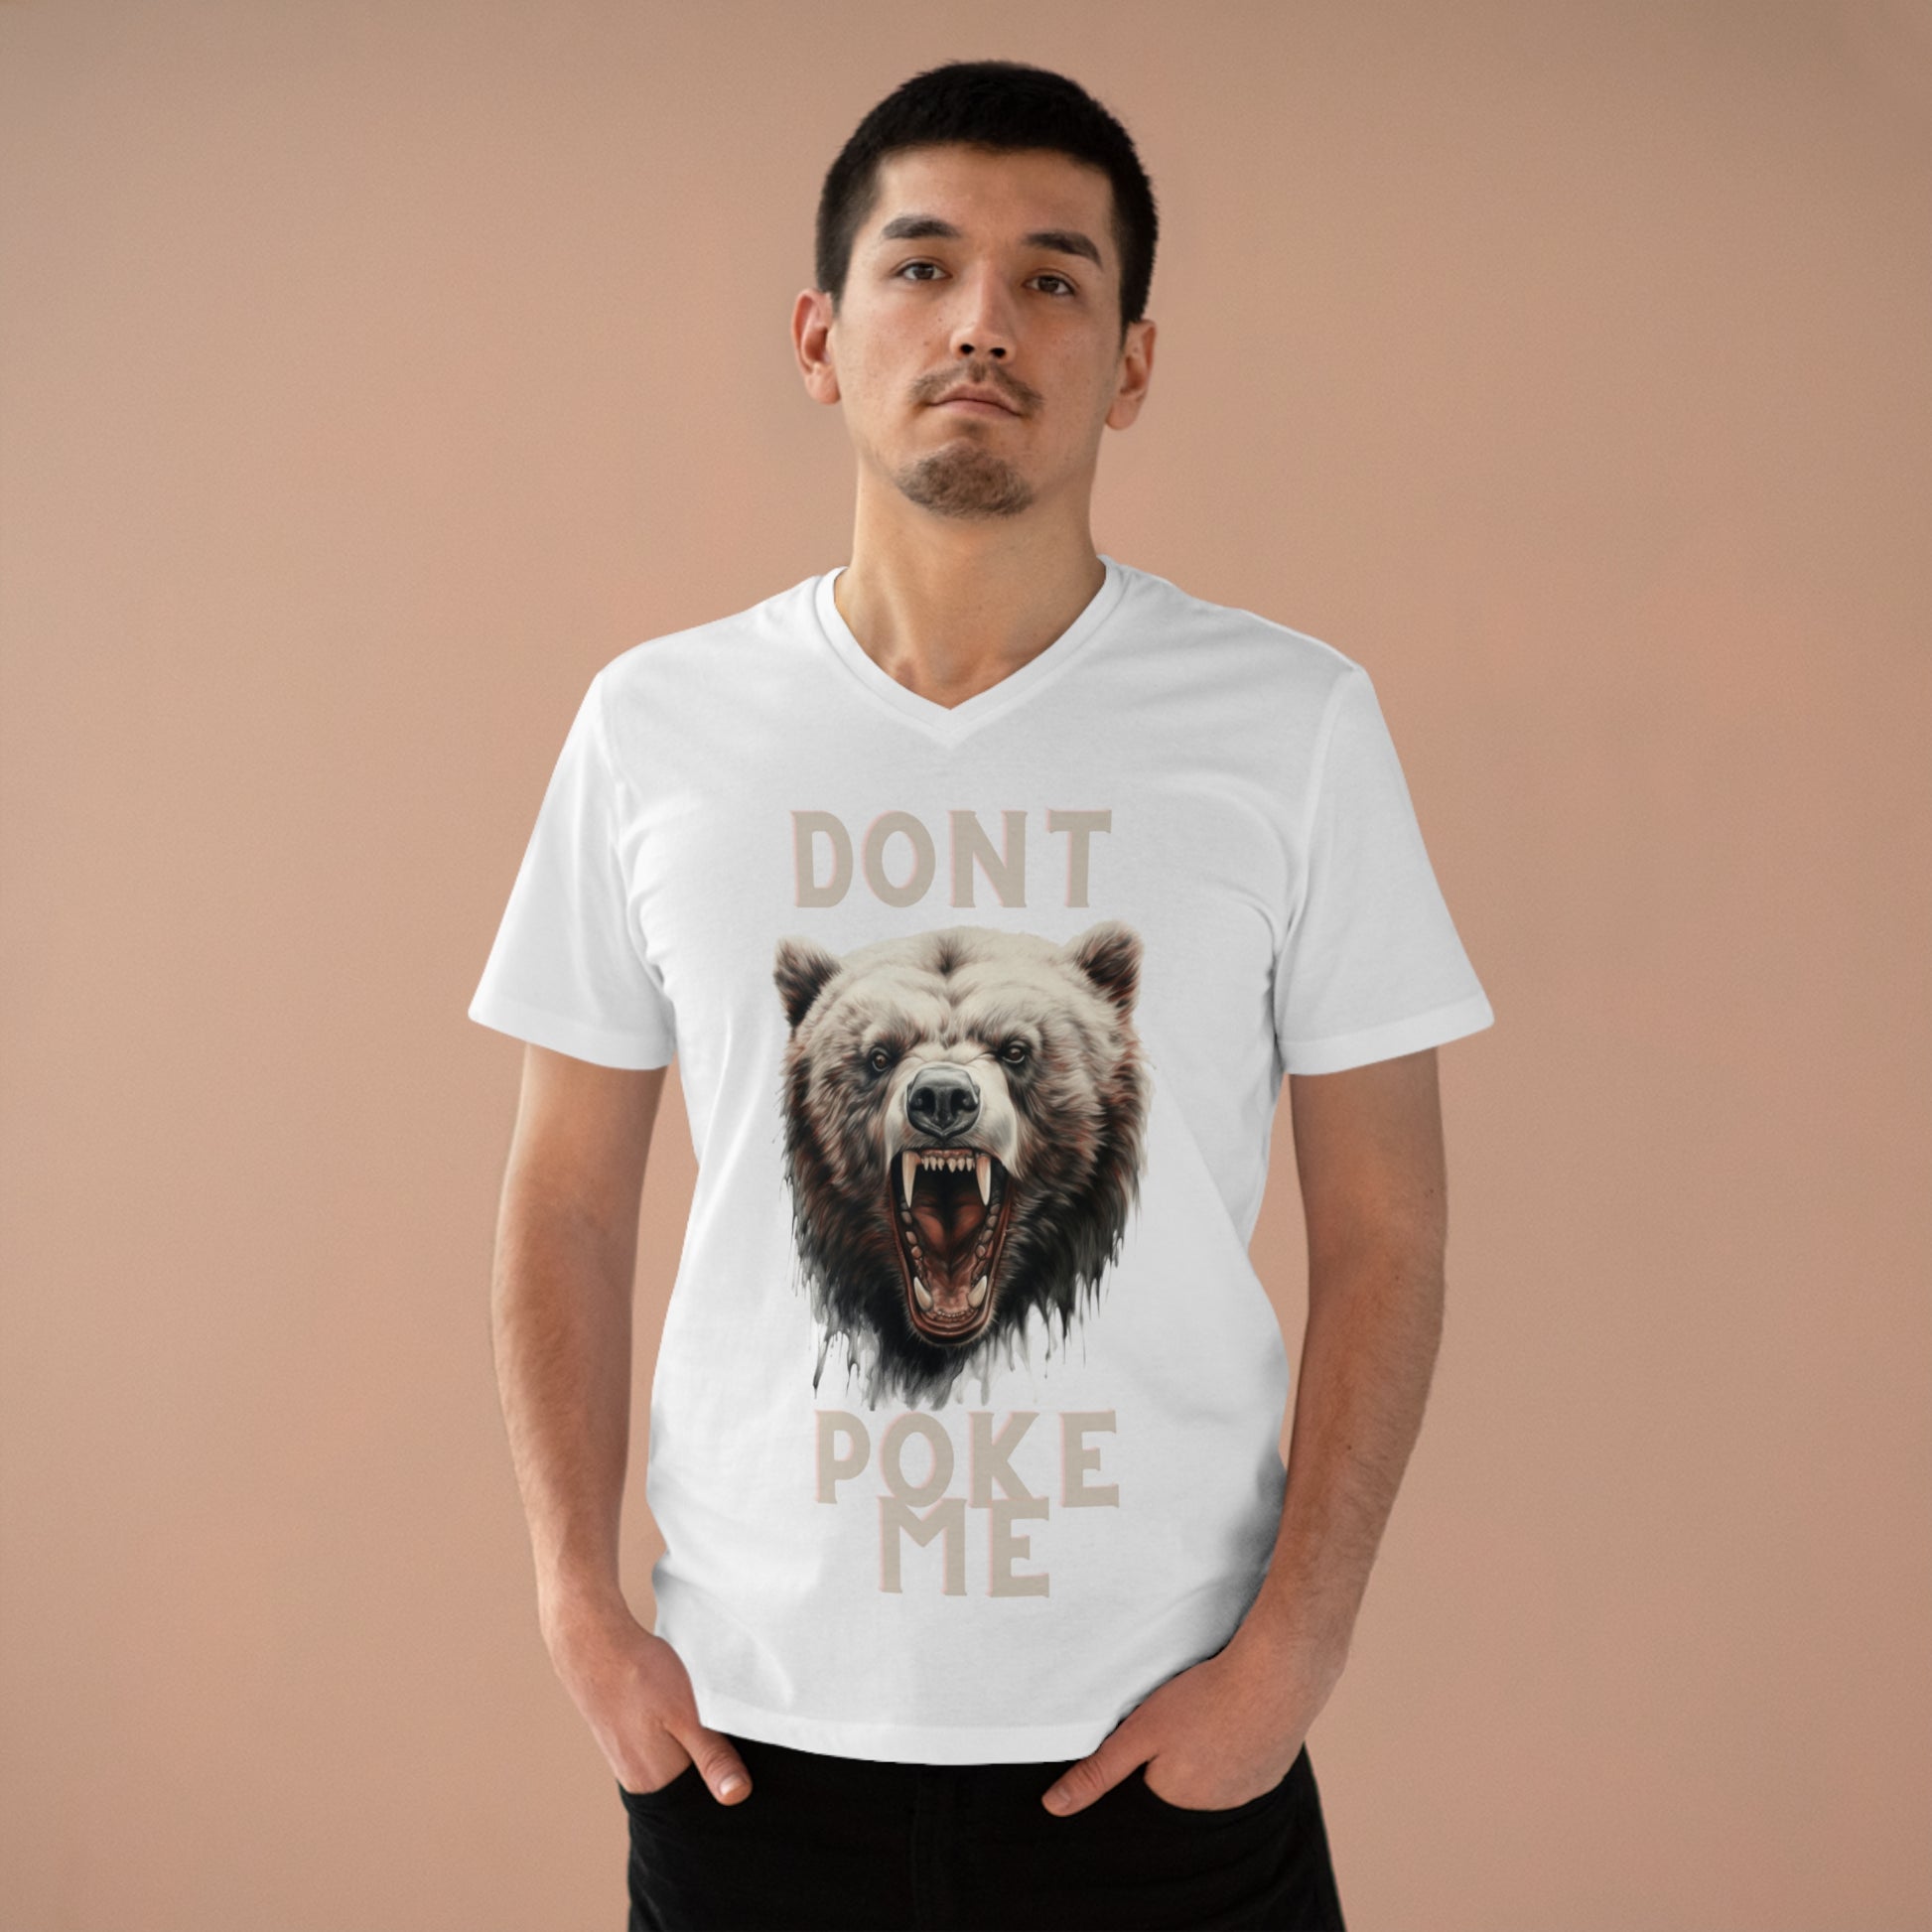 Angry Bear Close Up Men's Organic V-Neck T-Shirt X V-neck   